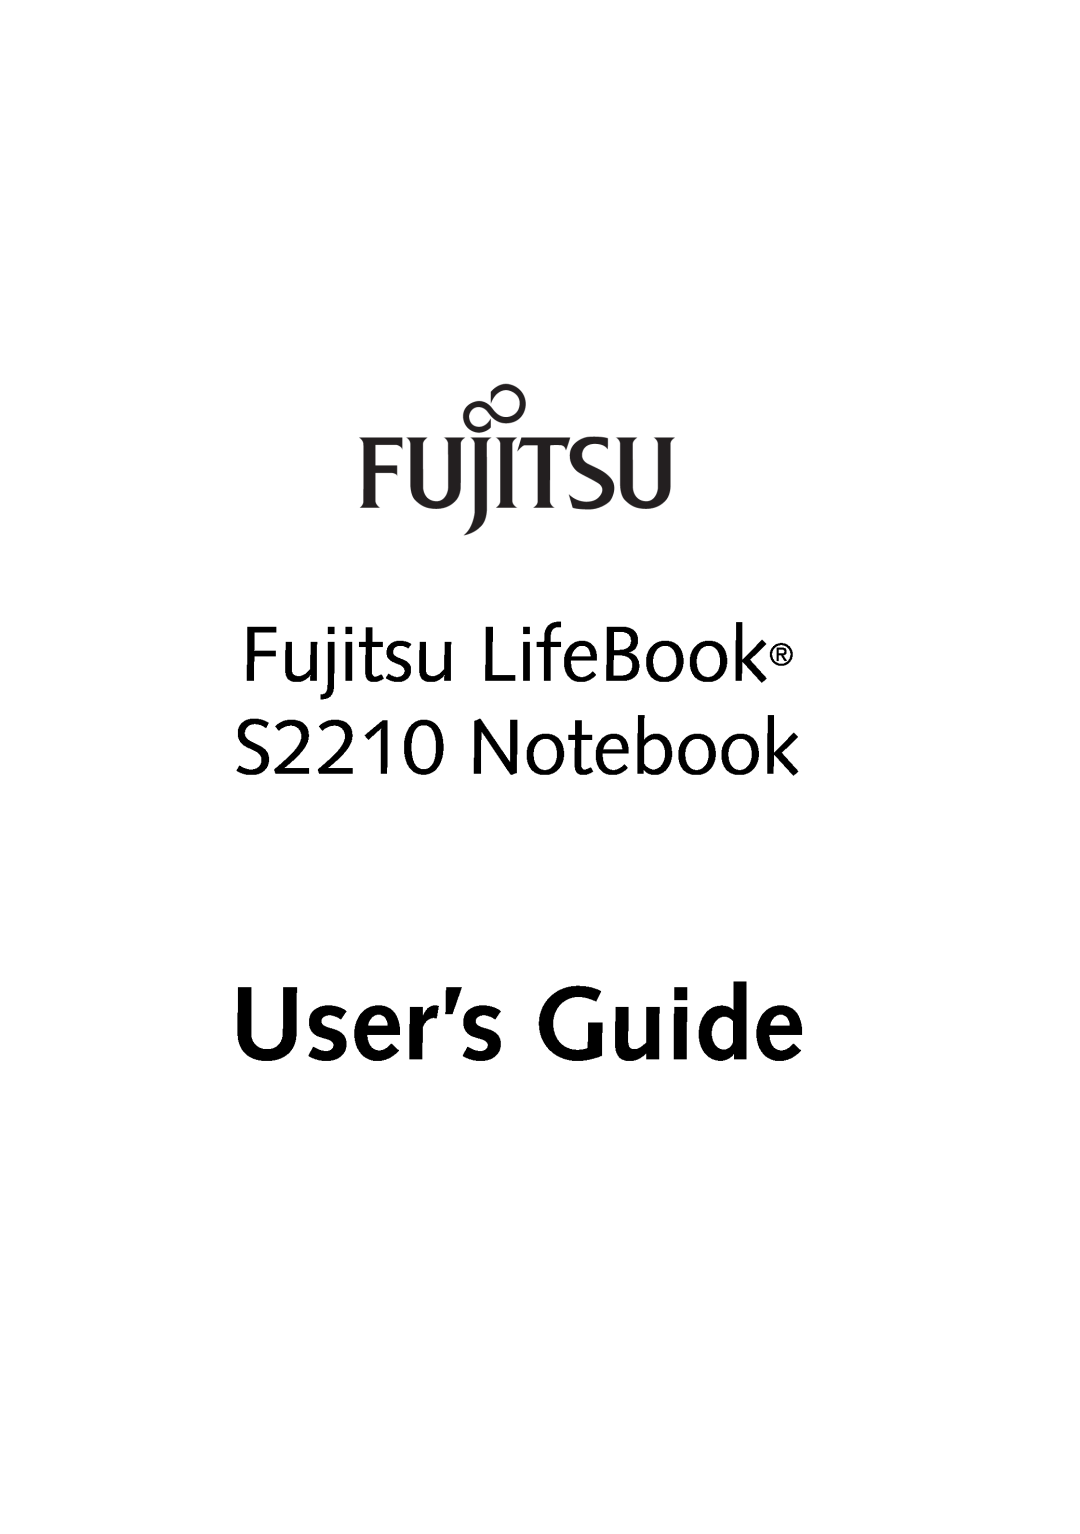 Fujitsu Siemens Computers manual User’s Guide, Fujitsu LifeBook S2210 Notebook 